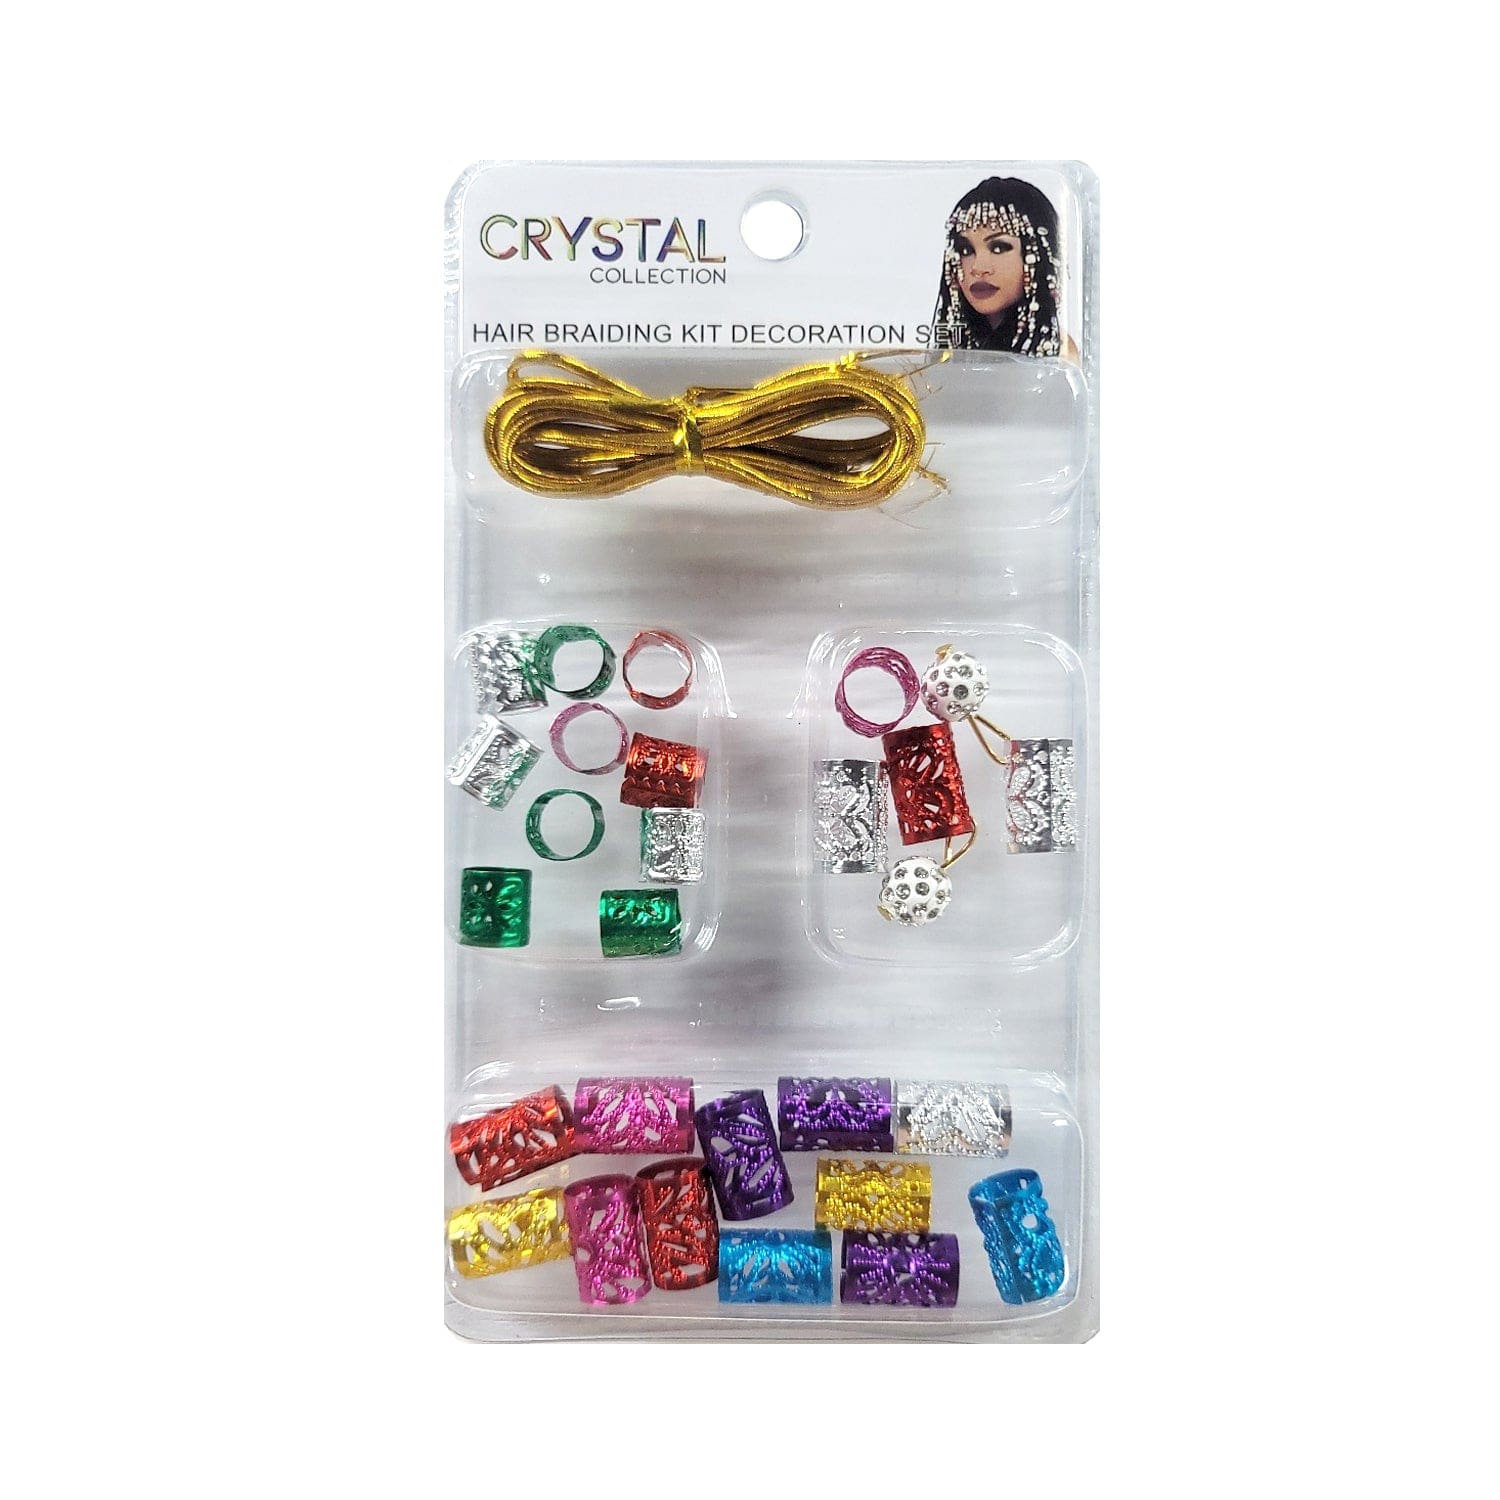 CRYSTAL COLLECTION | Hair Braiding Kit Decoration Set KNV2717G